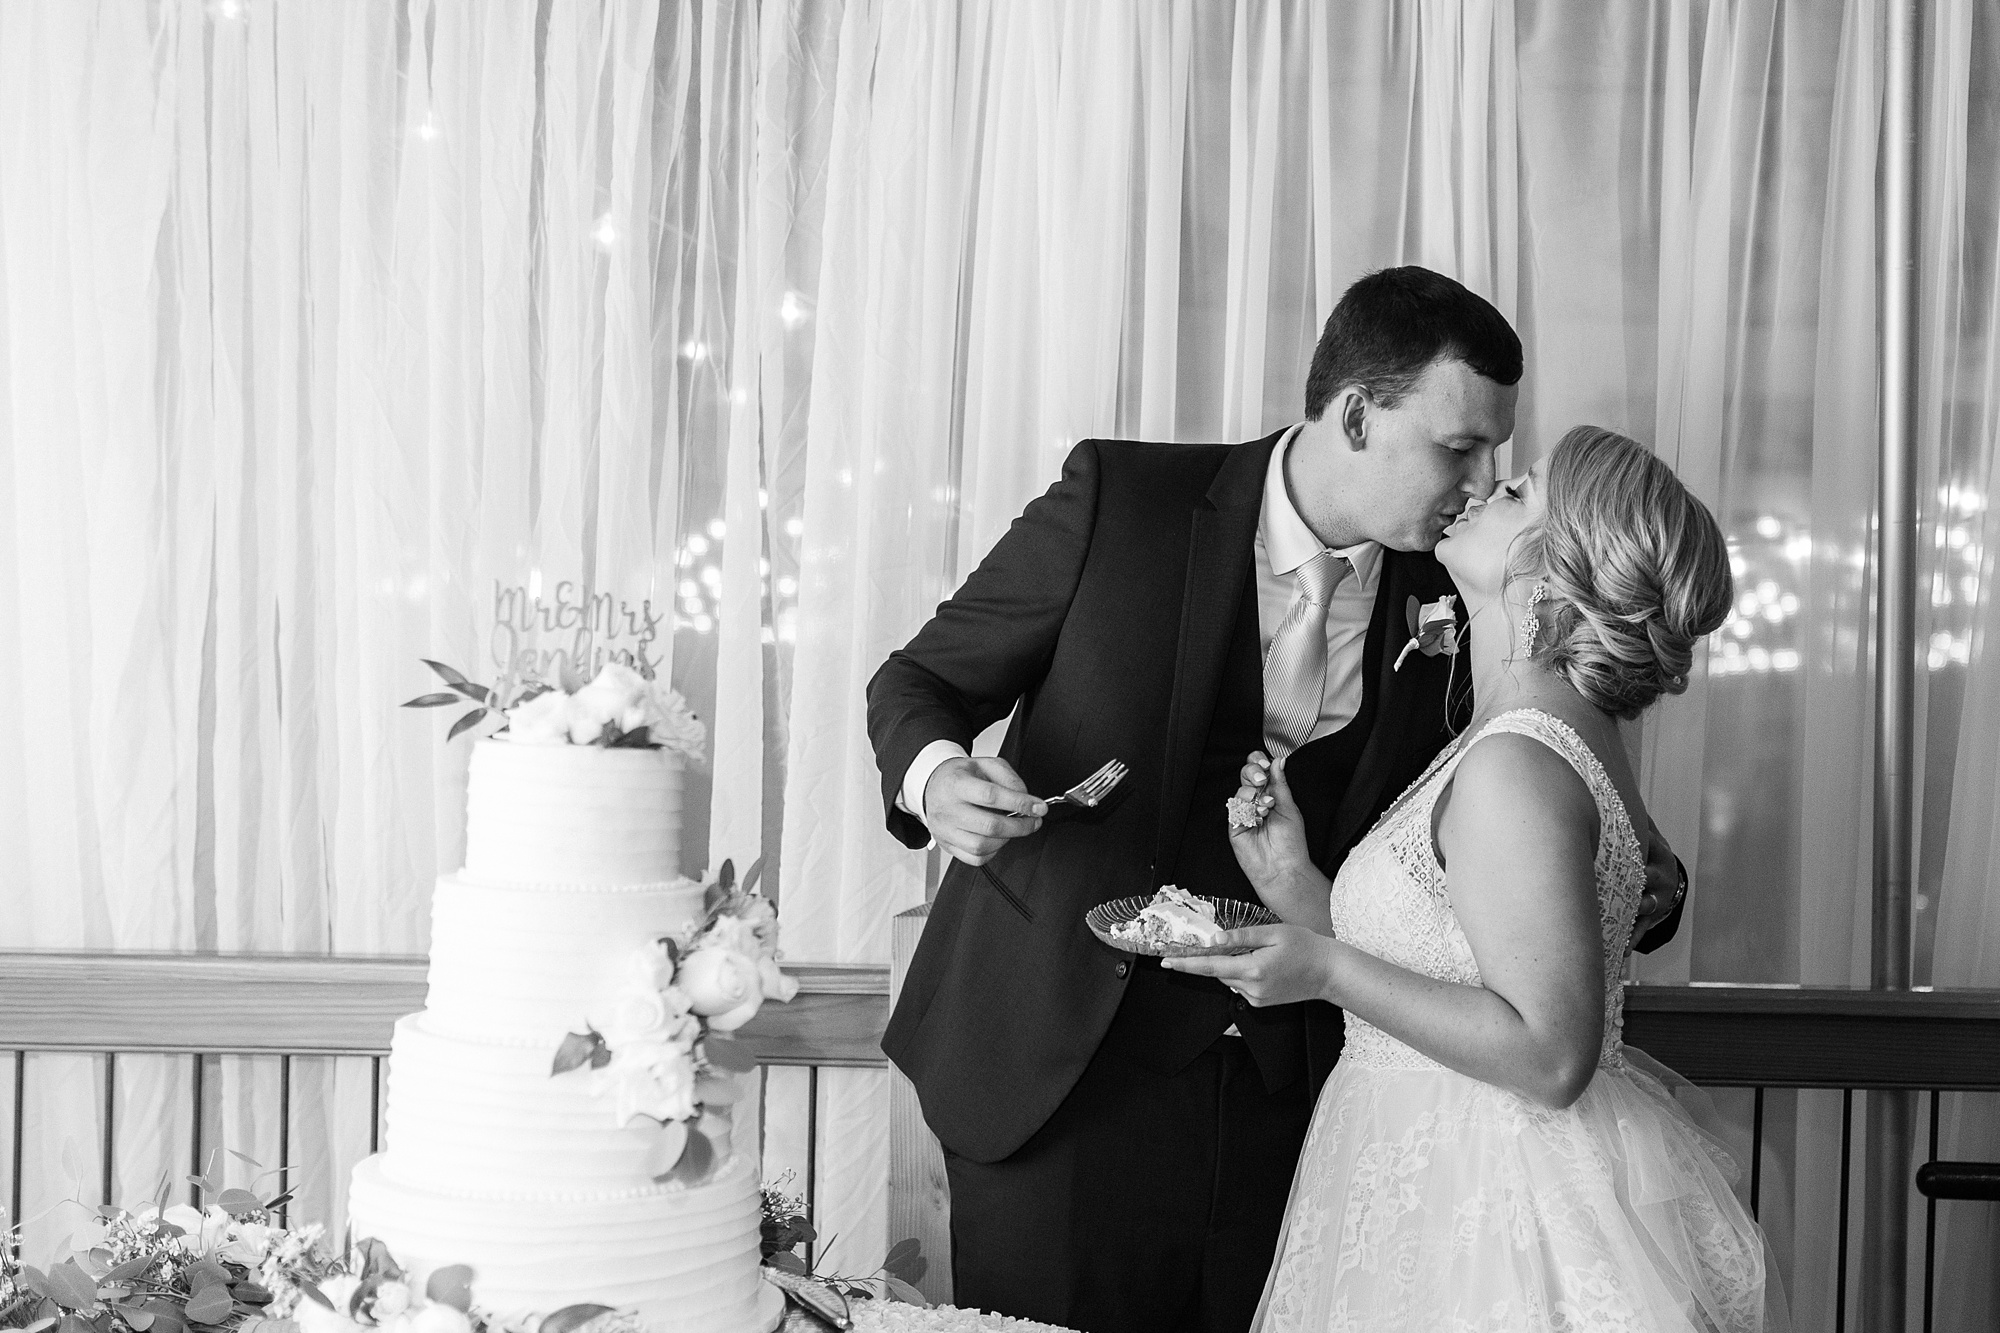 newlyweds kiss after cutting wedding cake at Raleigh NC wedding reception